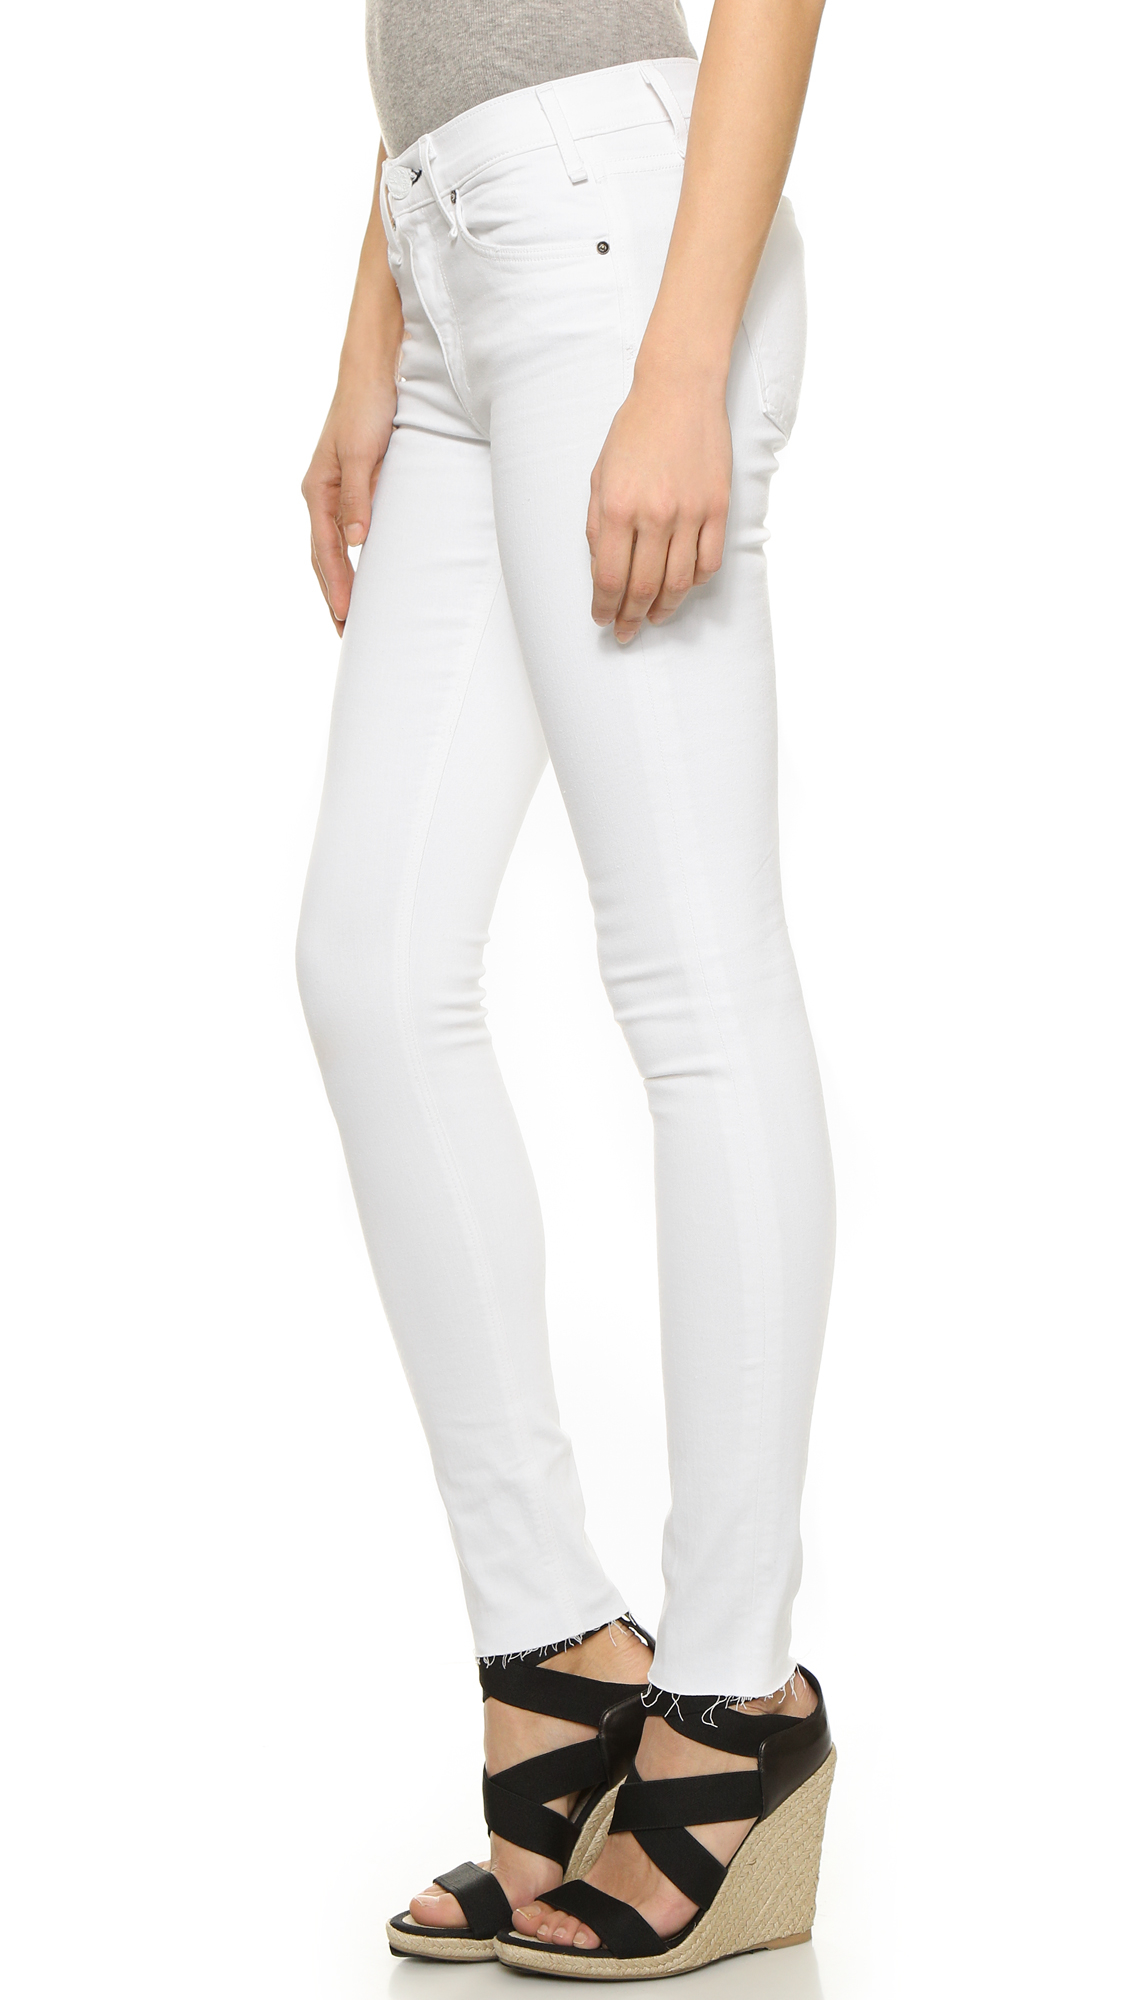 Lyst - Mcguire Denim Newton Skinny Jeans With Raw Hem - White Moon in White1128 x 2000